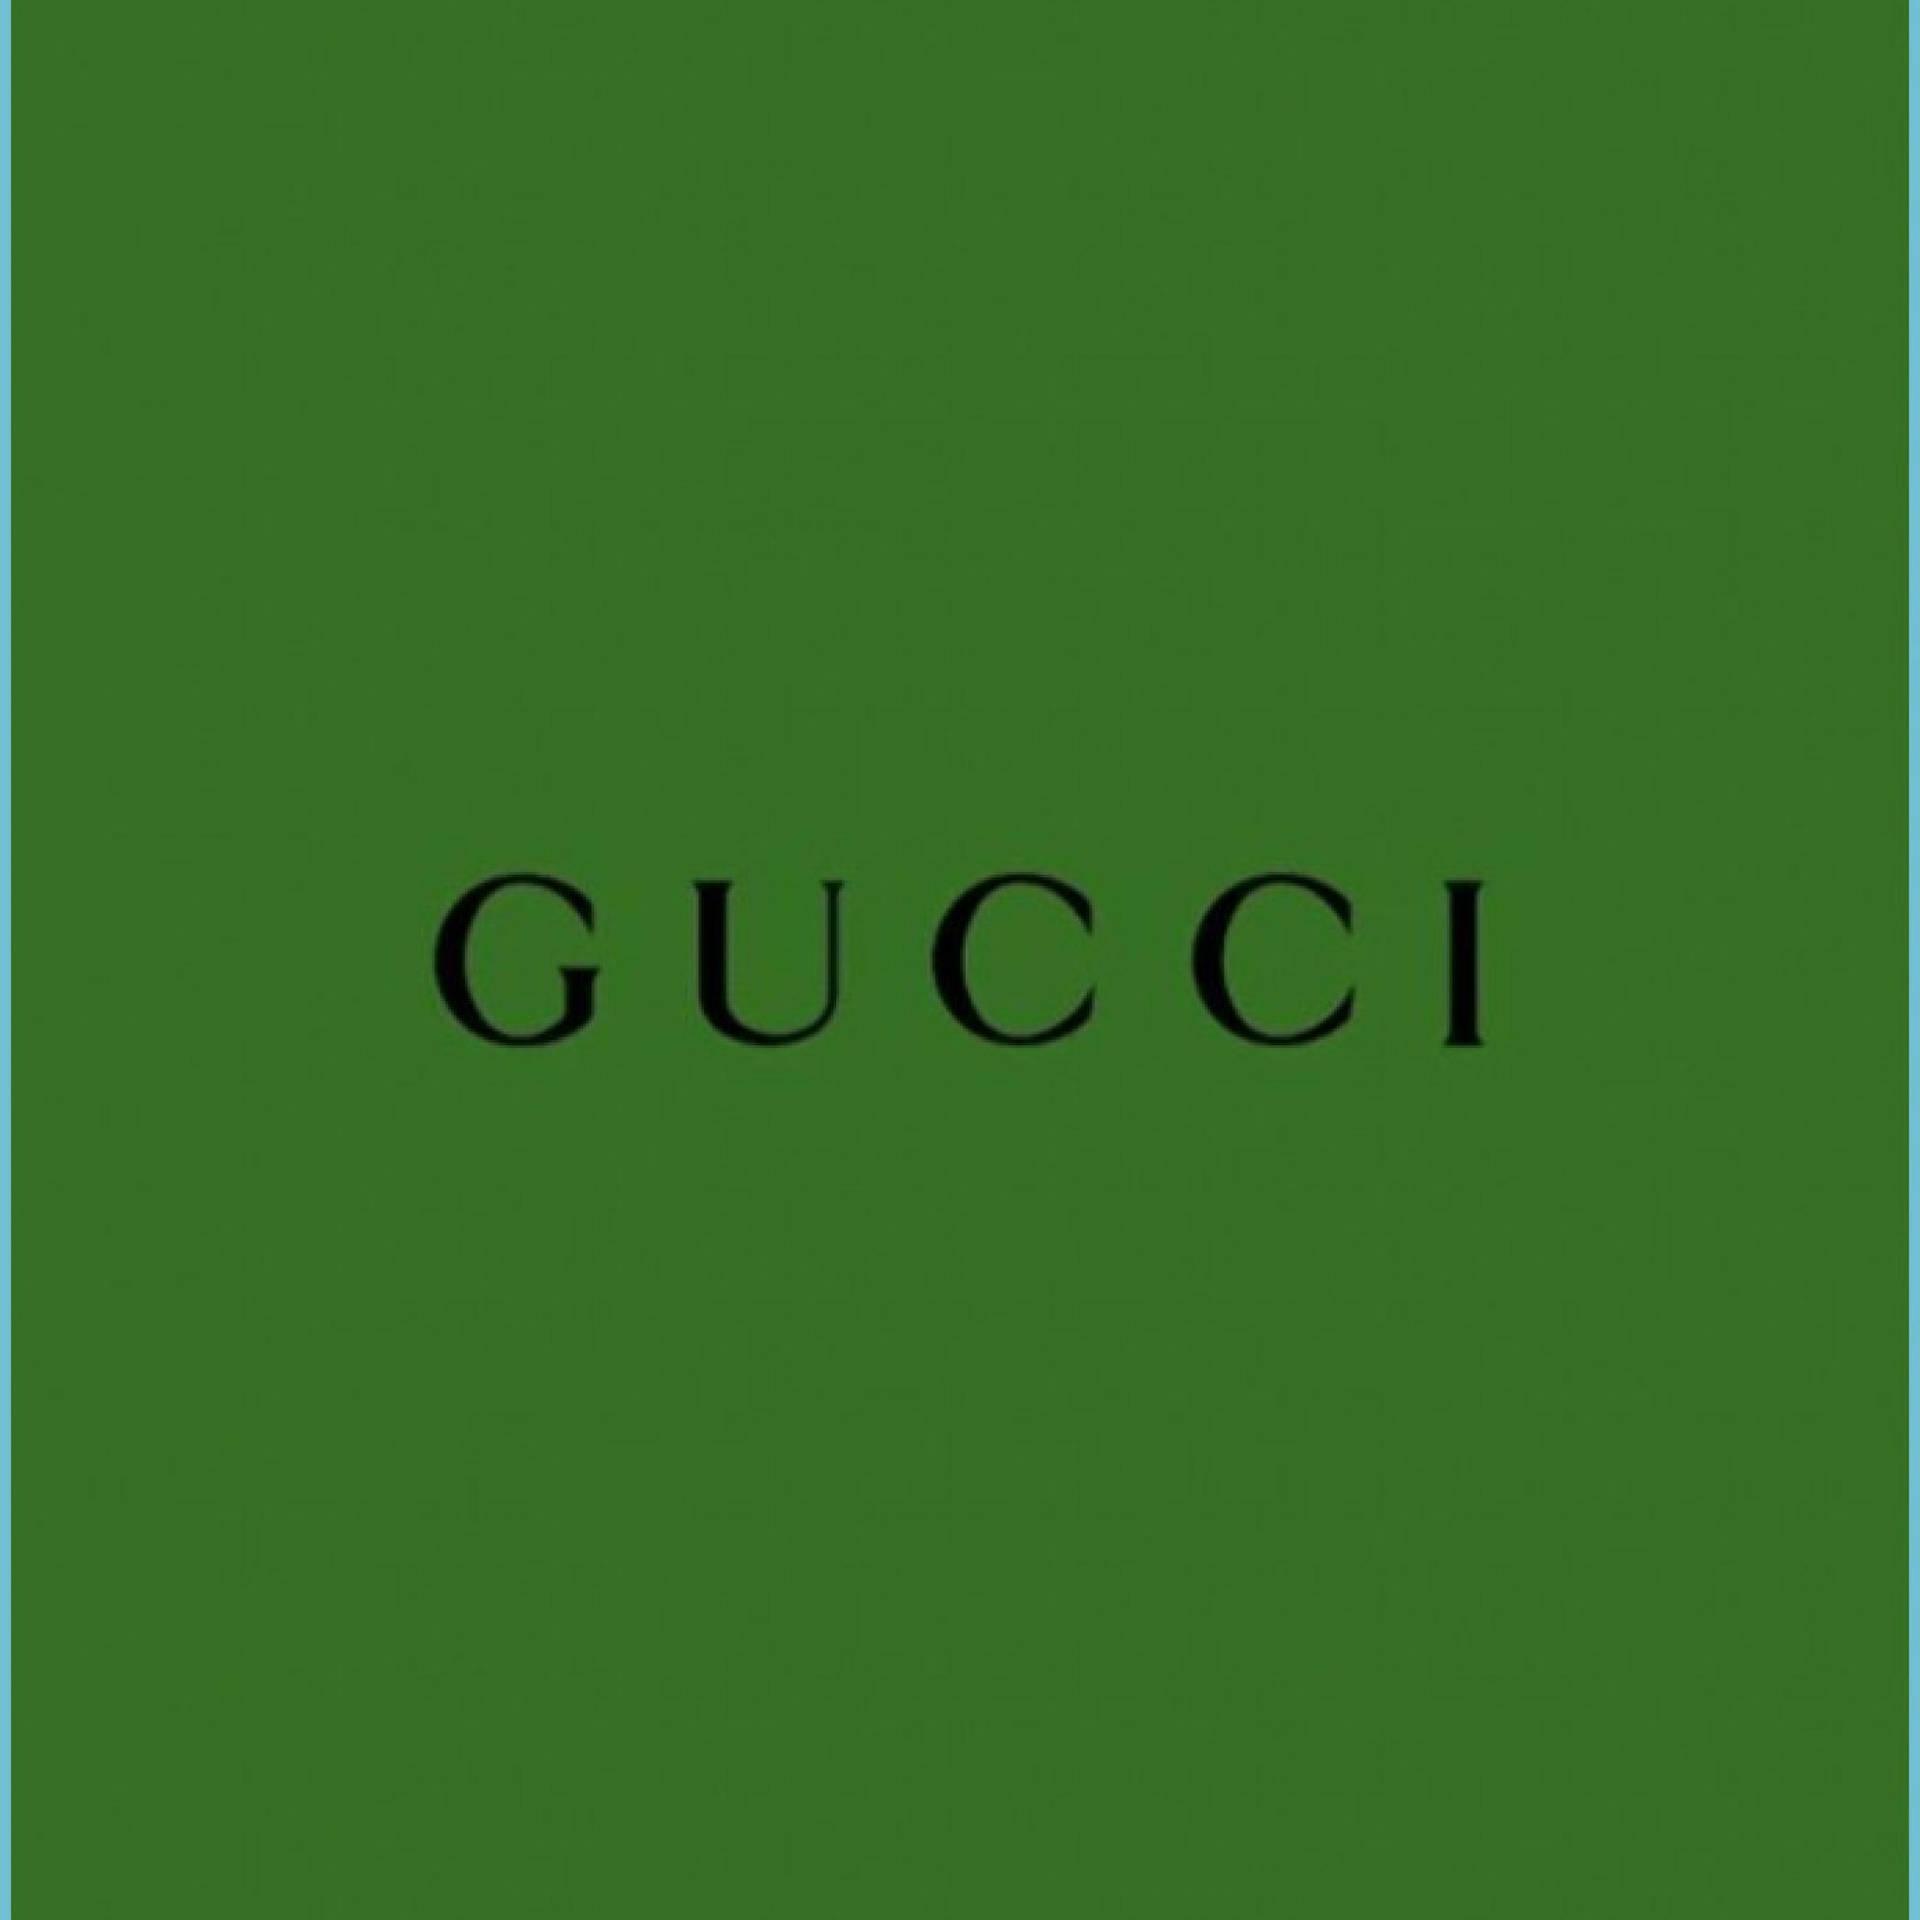 Gucci Plain Green Background